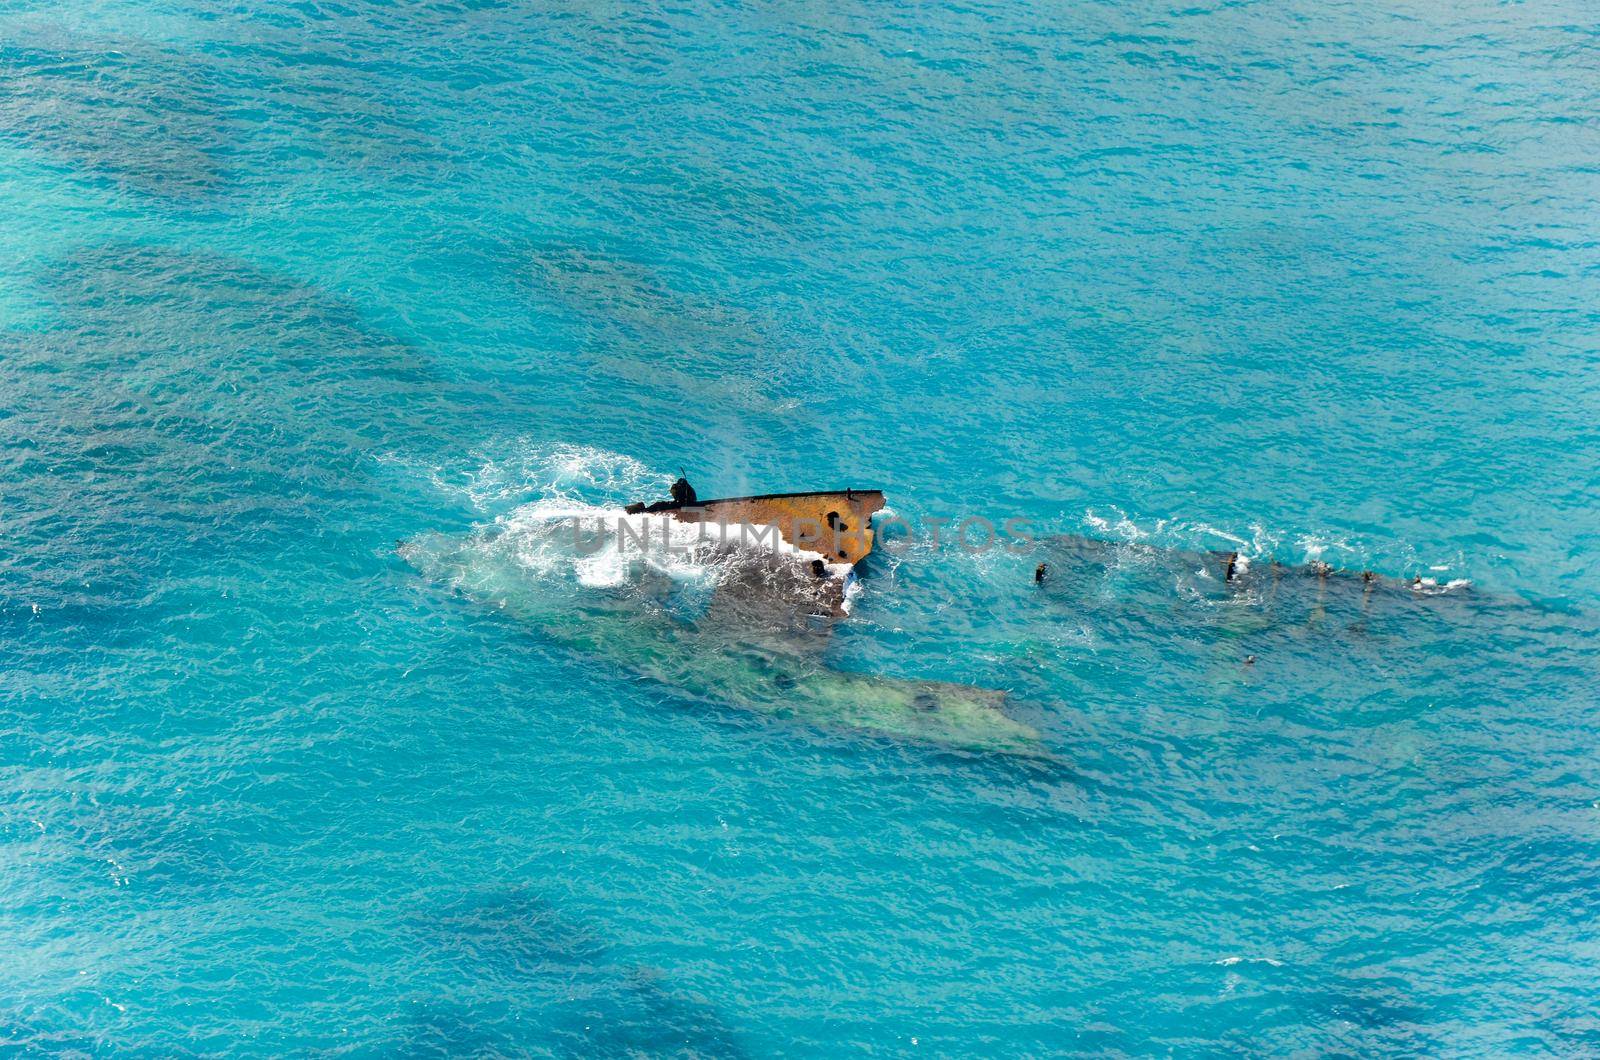 Shipwreck in the Carribean sea.